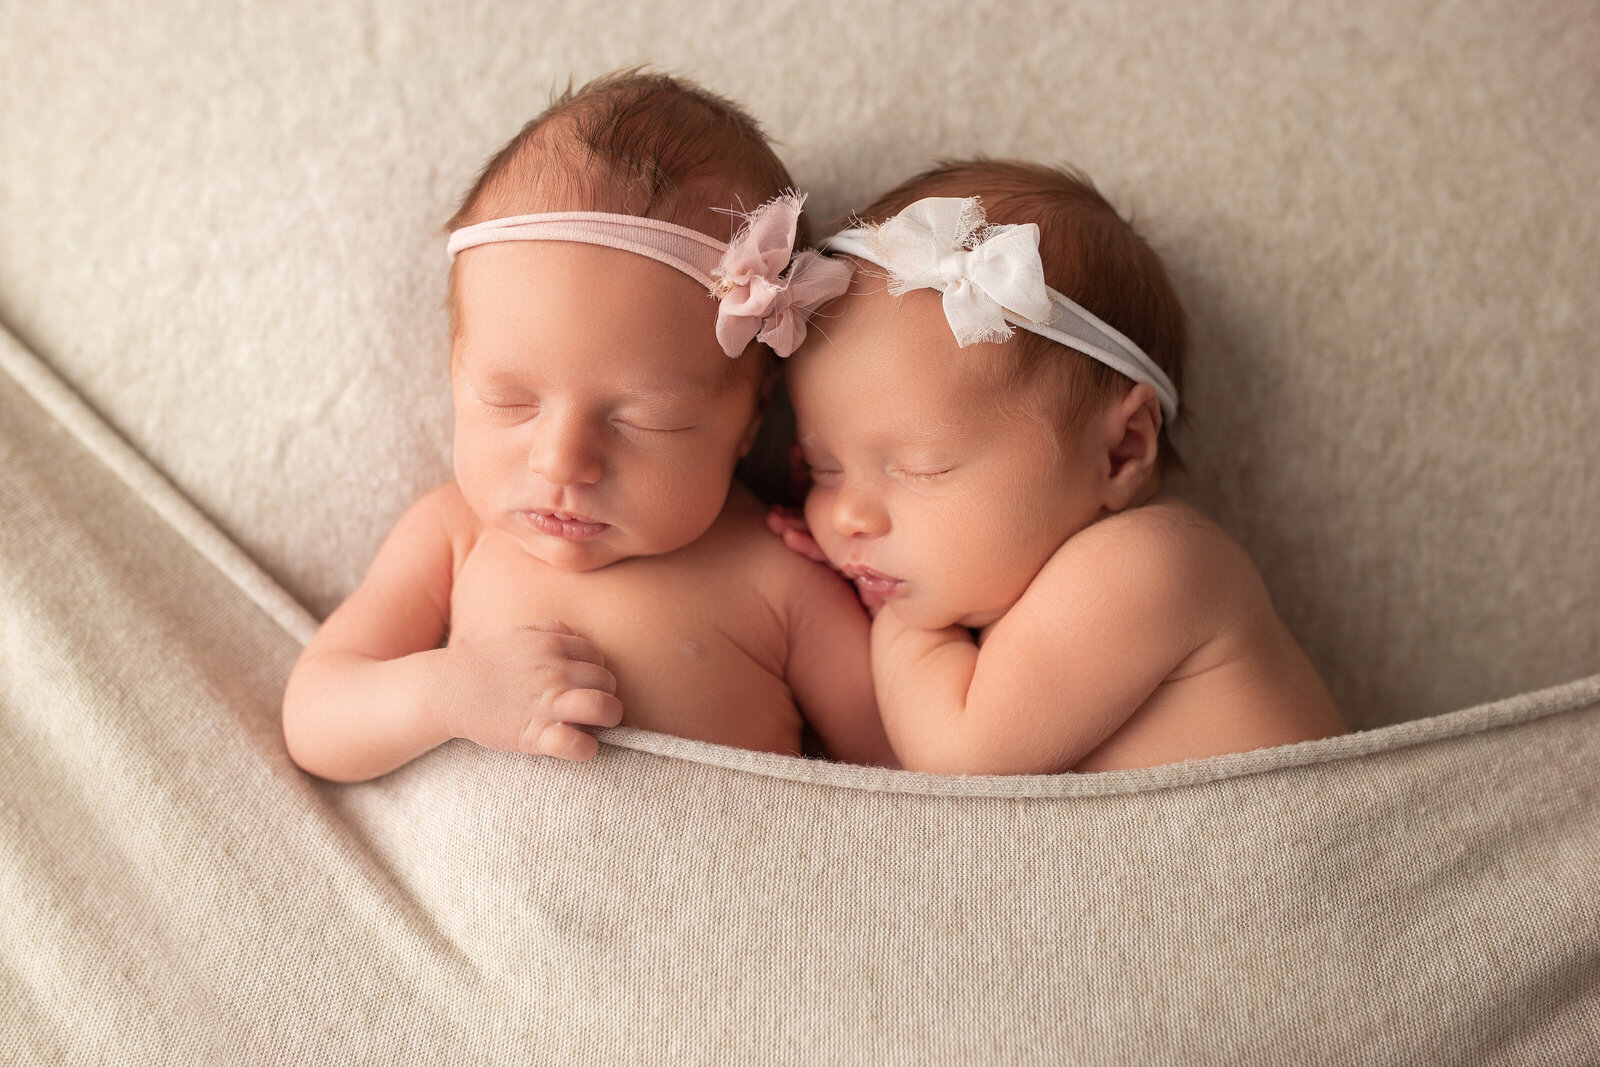 Newborn twin siblings cuddling